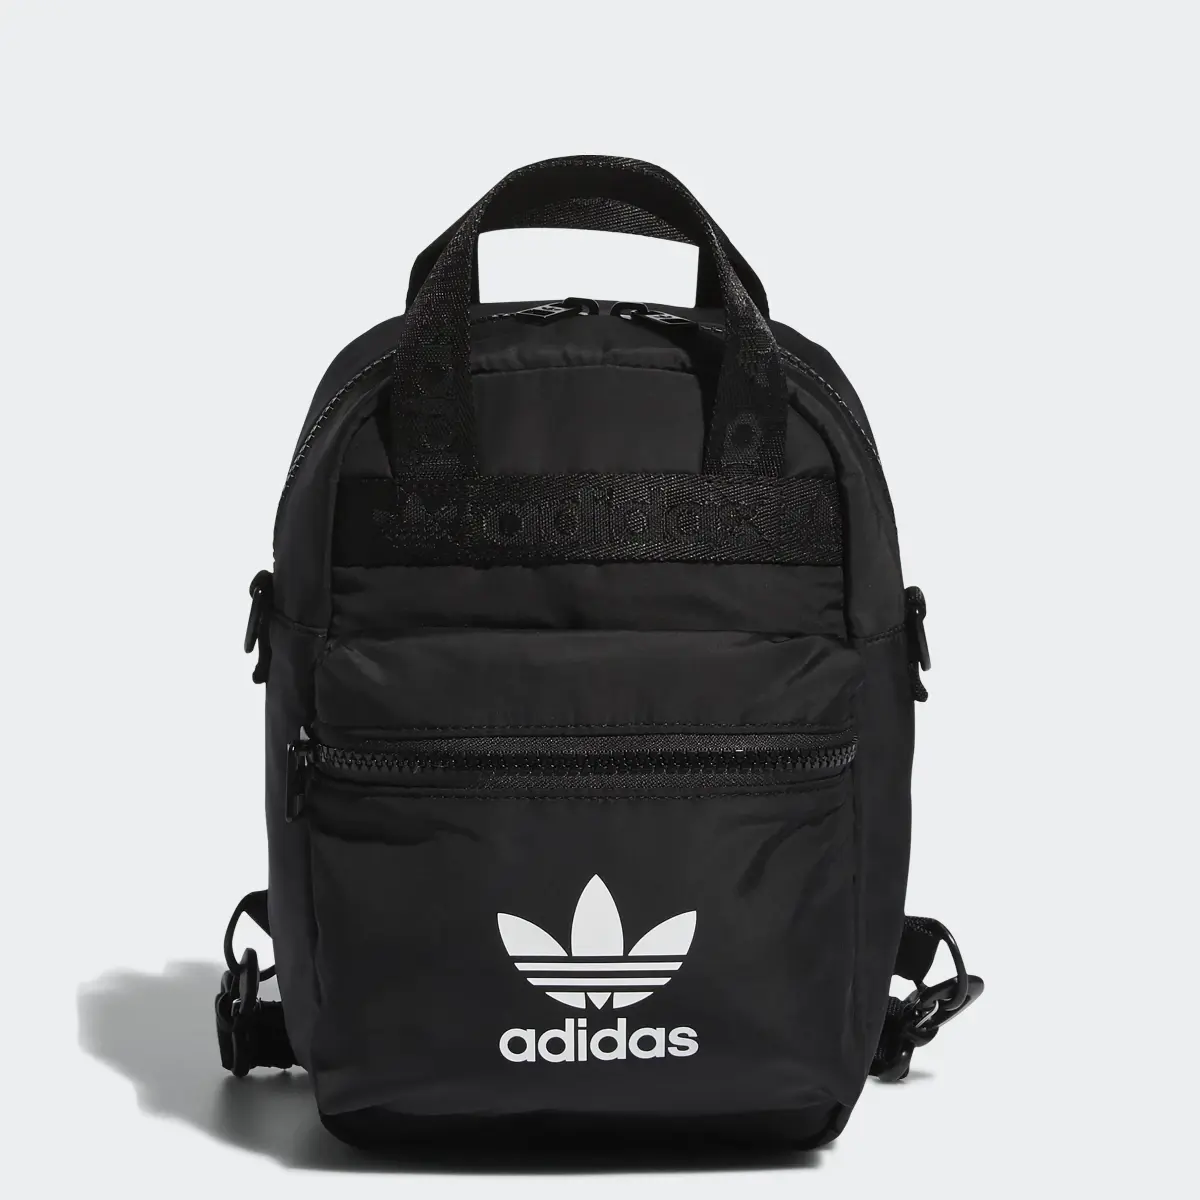 Adidas Micro Mini Backpack. 1